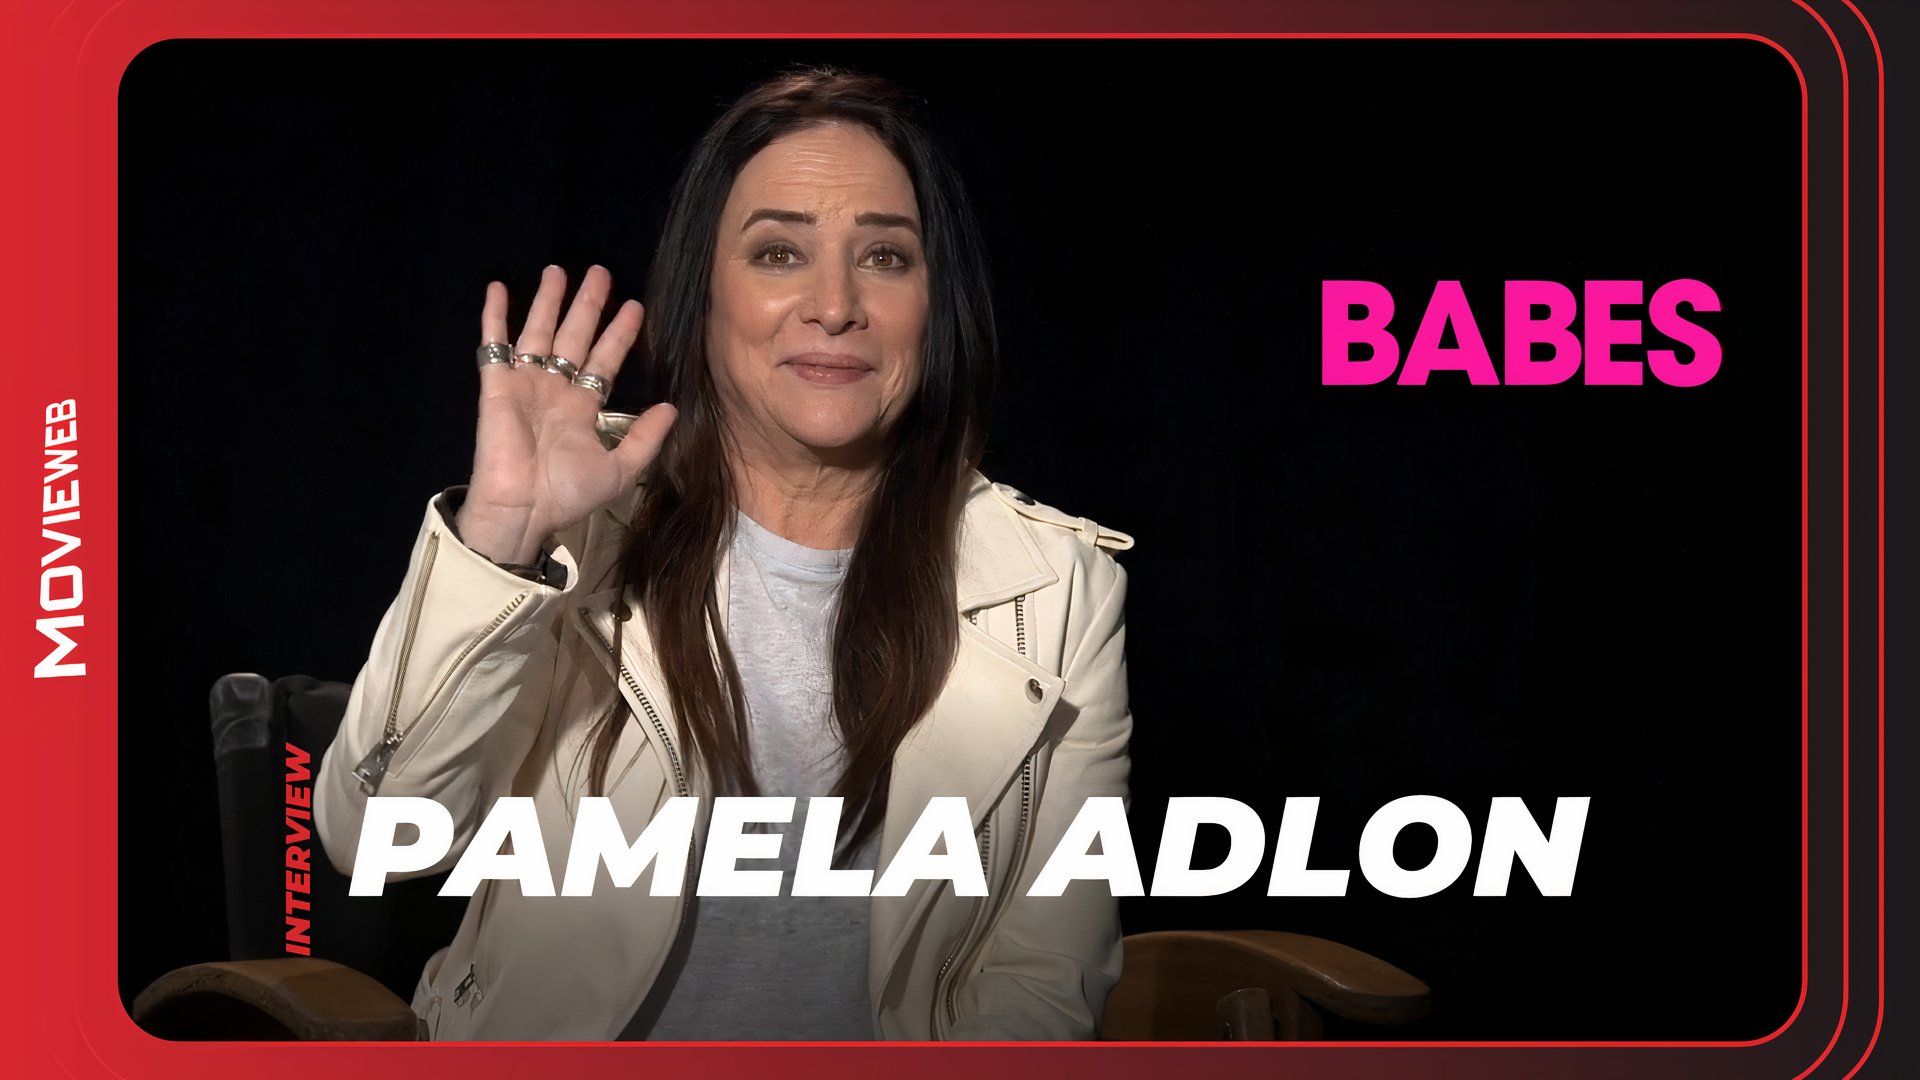 Babes - Pamela Adlon